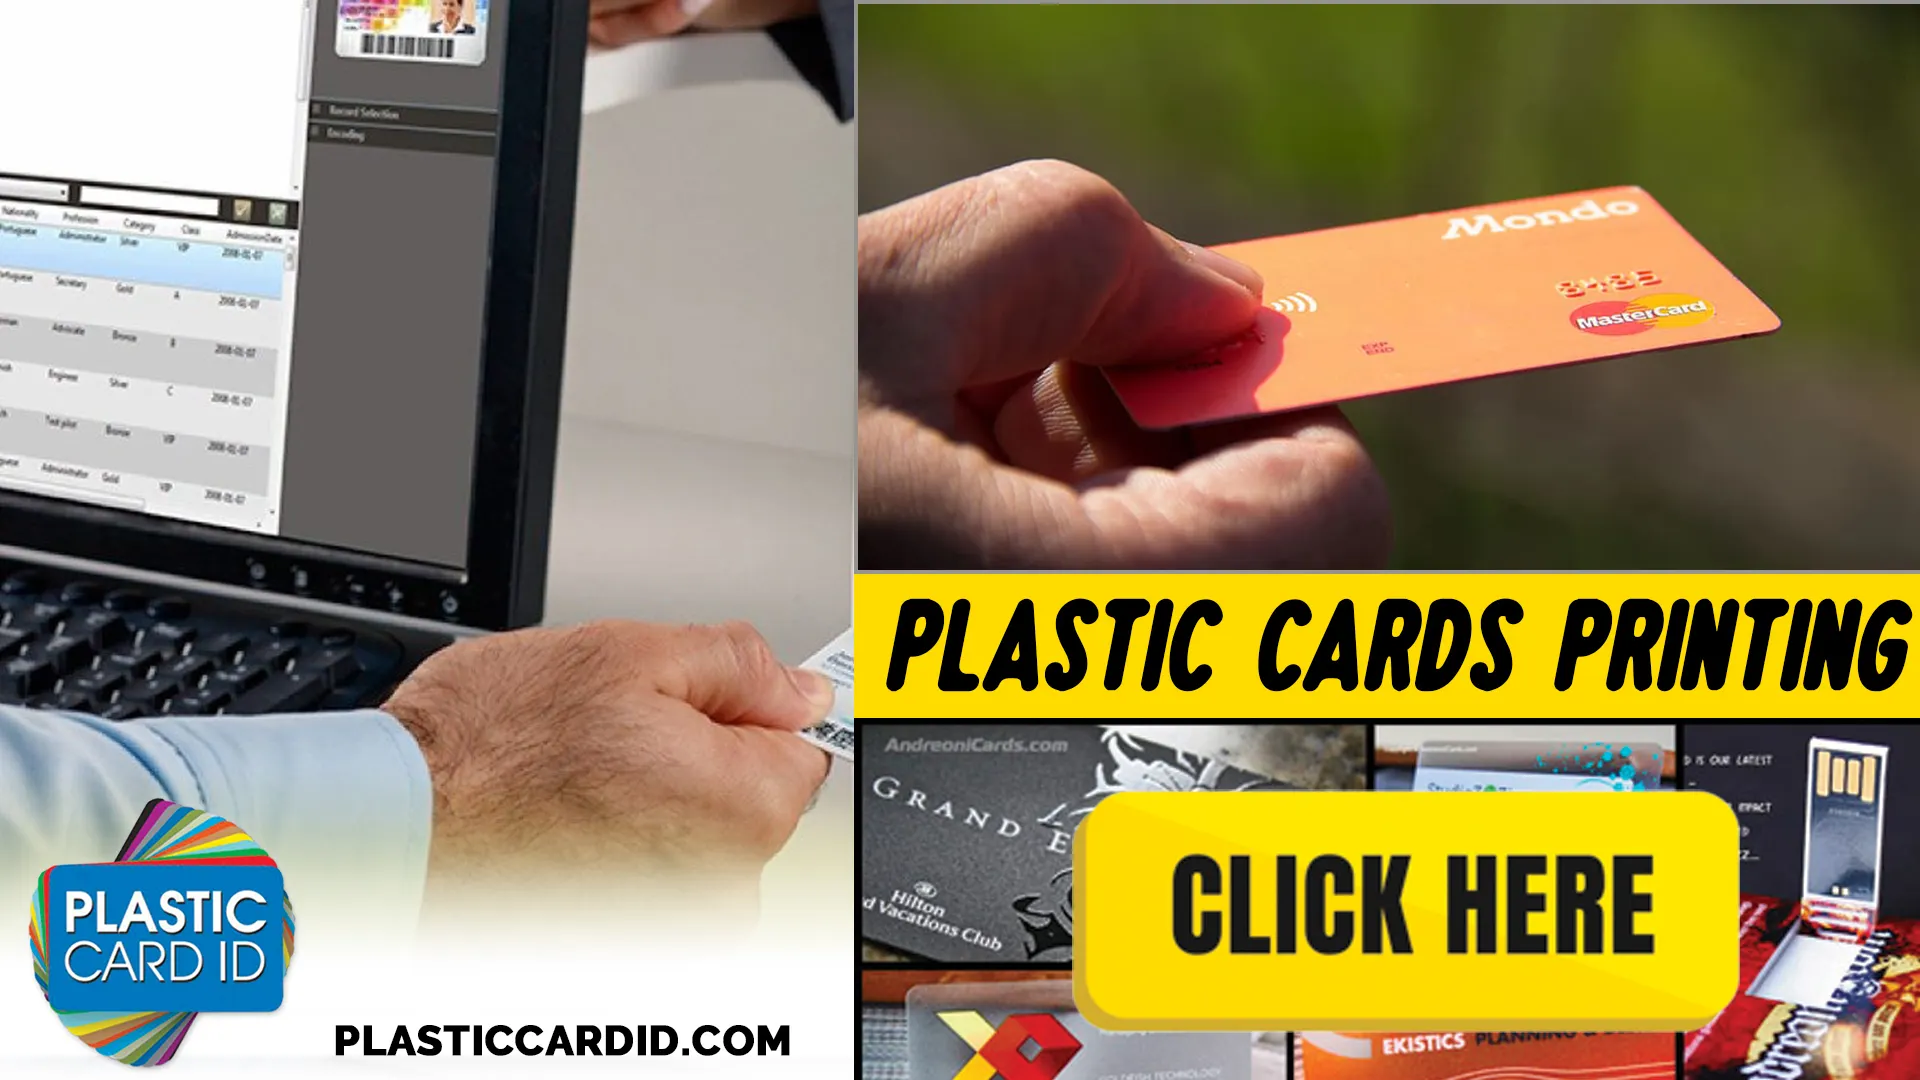 Plastic Cards: A Versatile Choice